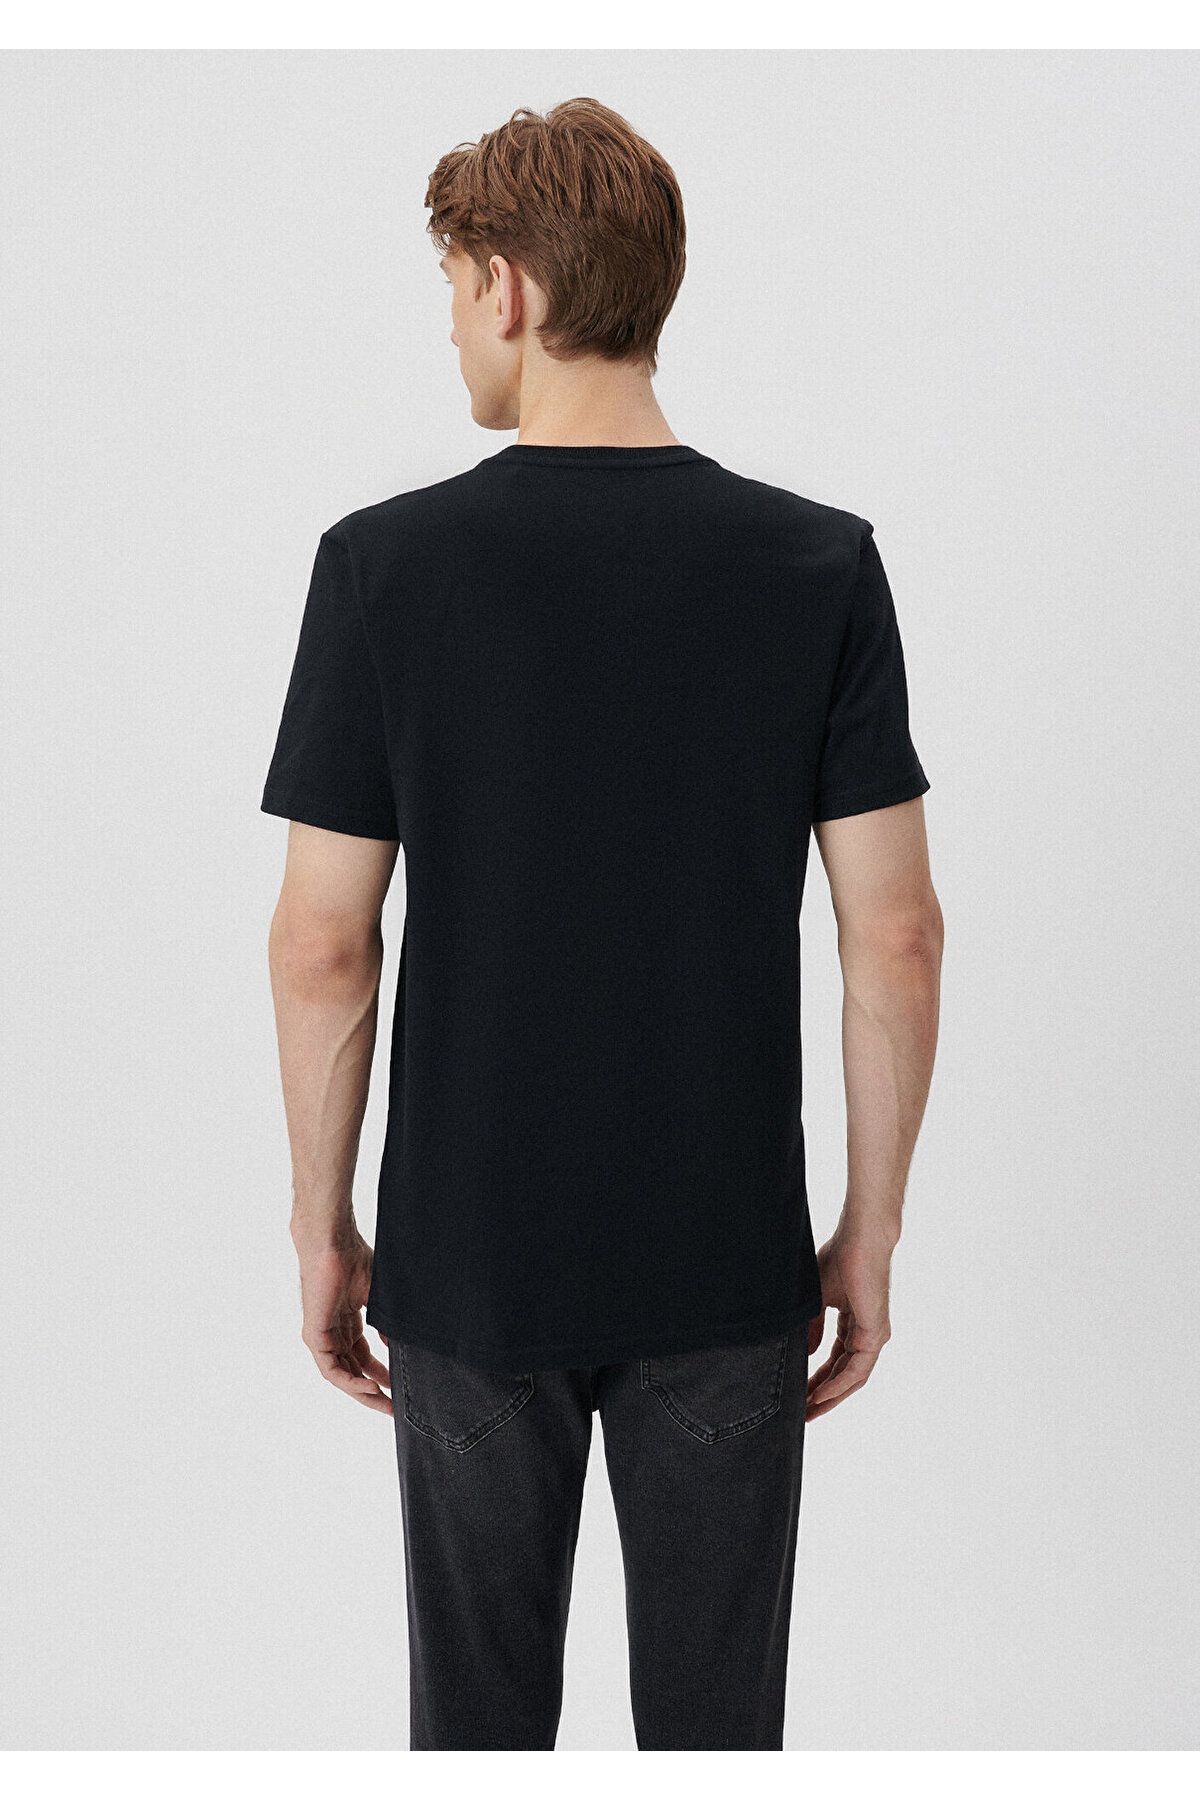 Mavi تی شرت سیاه چاپی استانبول بزرگ / بخش گسترده ای 0610352-900